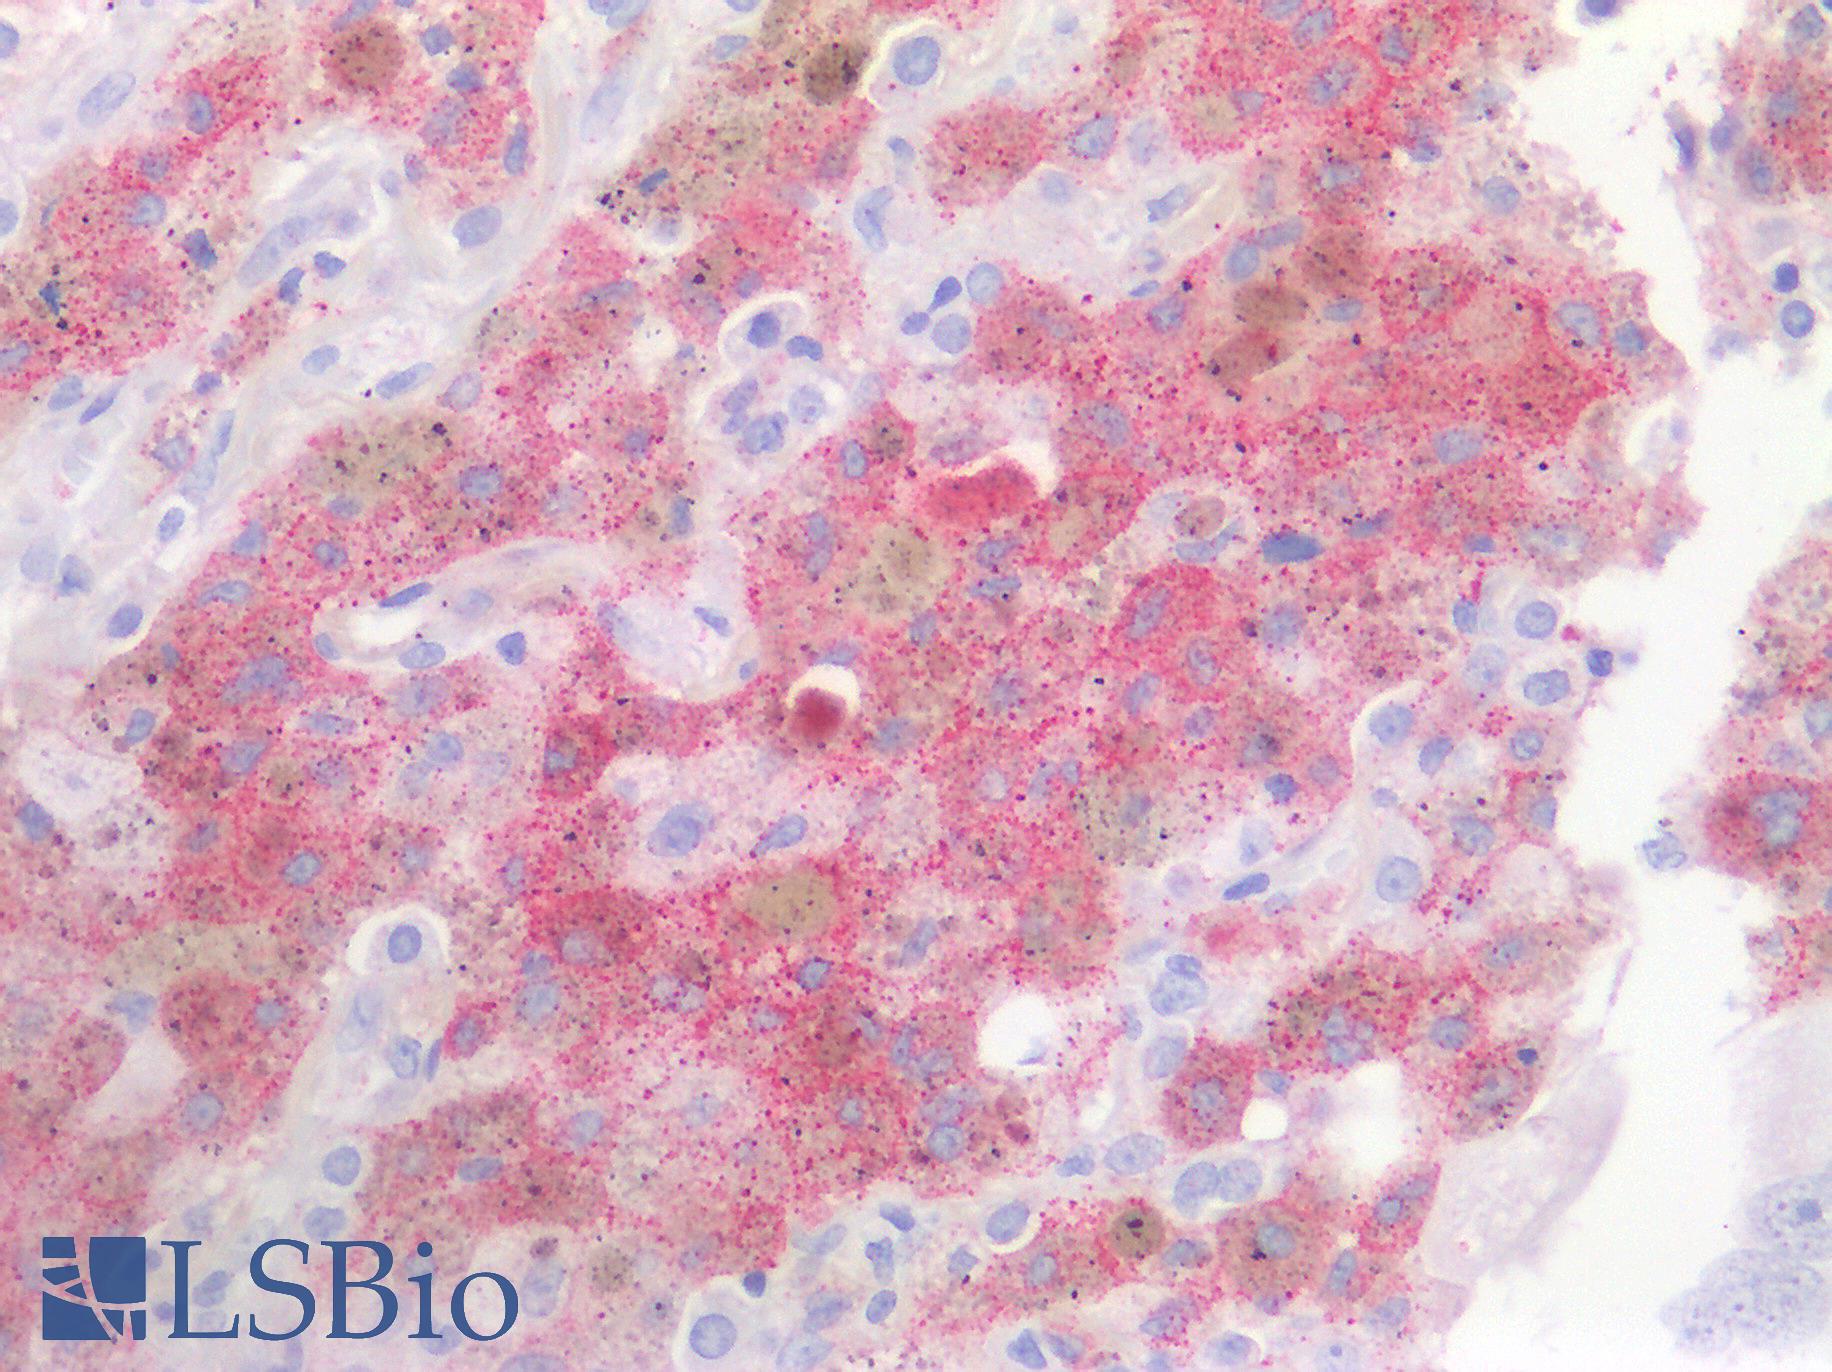 EGFR Antibody - Human Lung Carcinoma: Formalin-Fixed, Paraffin-Embedded (FFPE)